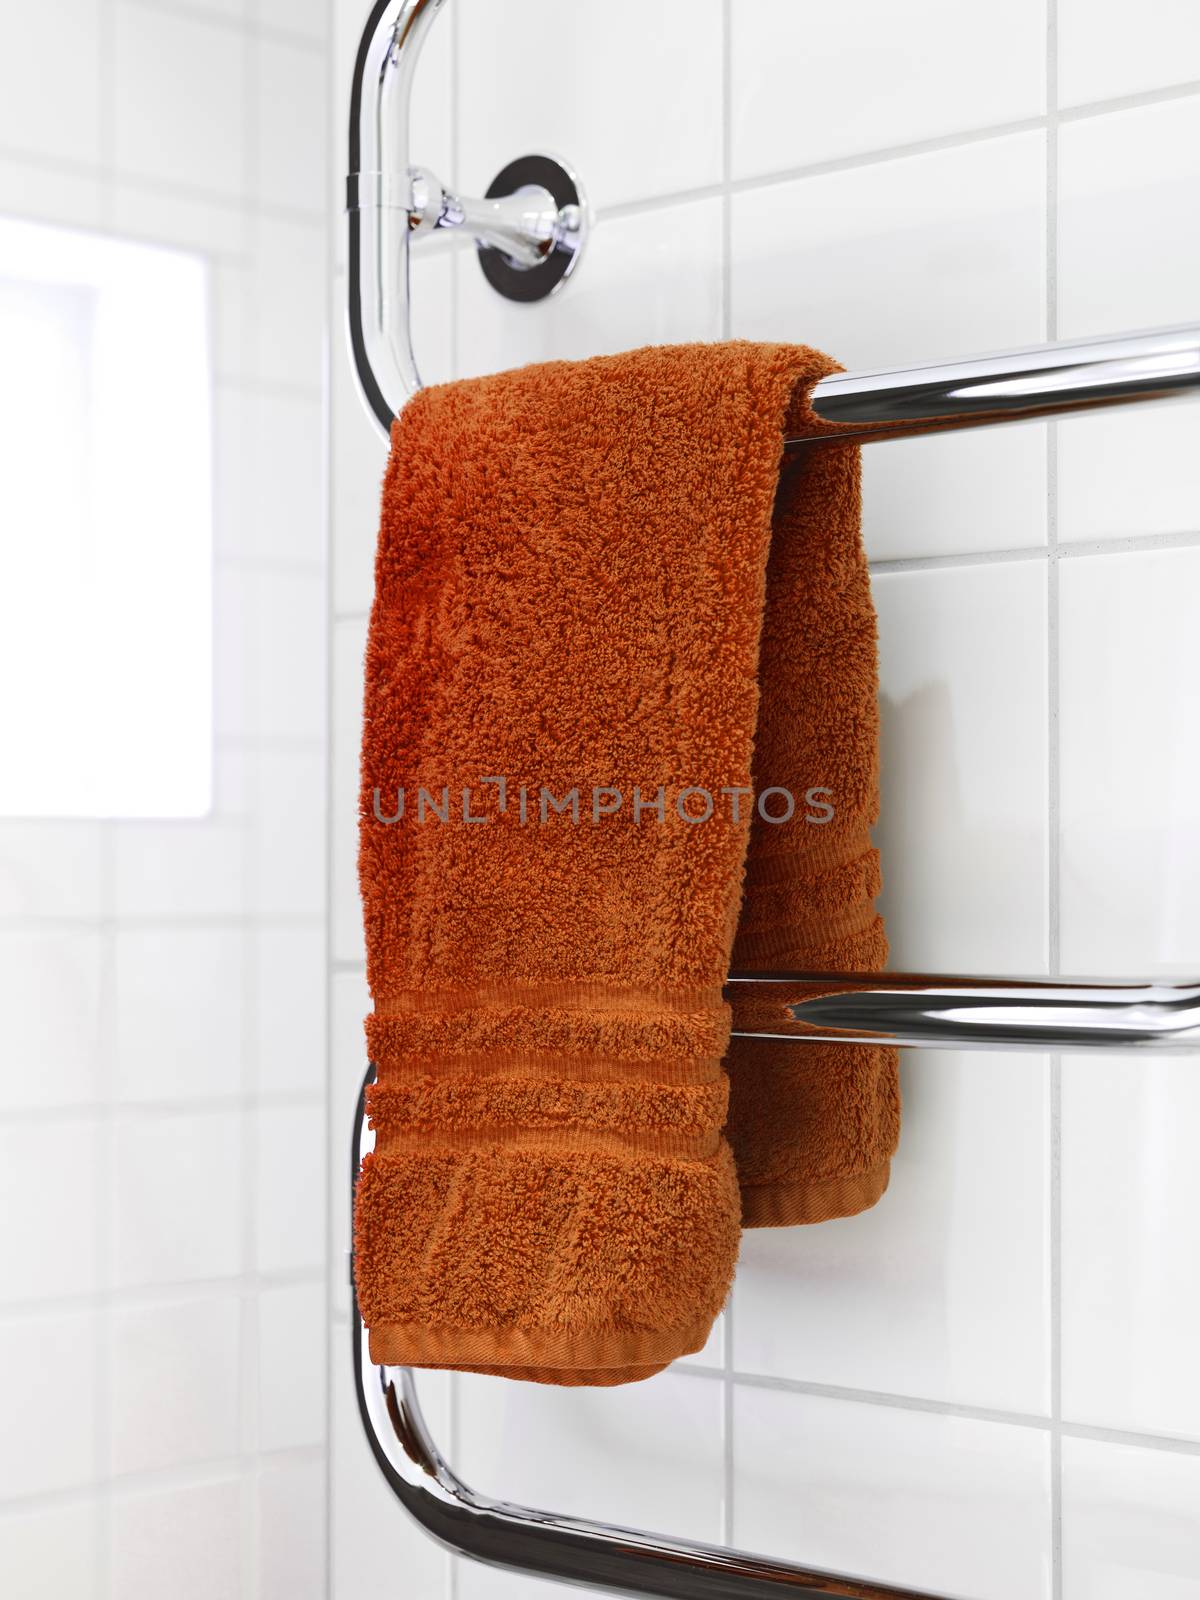 Orange Towel on a dryer in modern bathroom environment